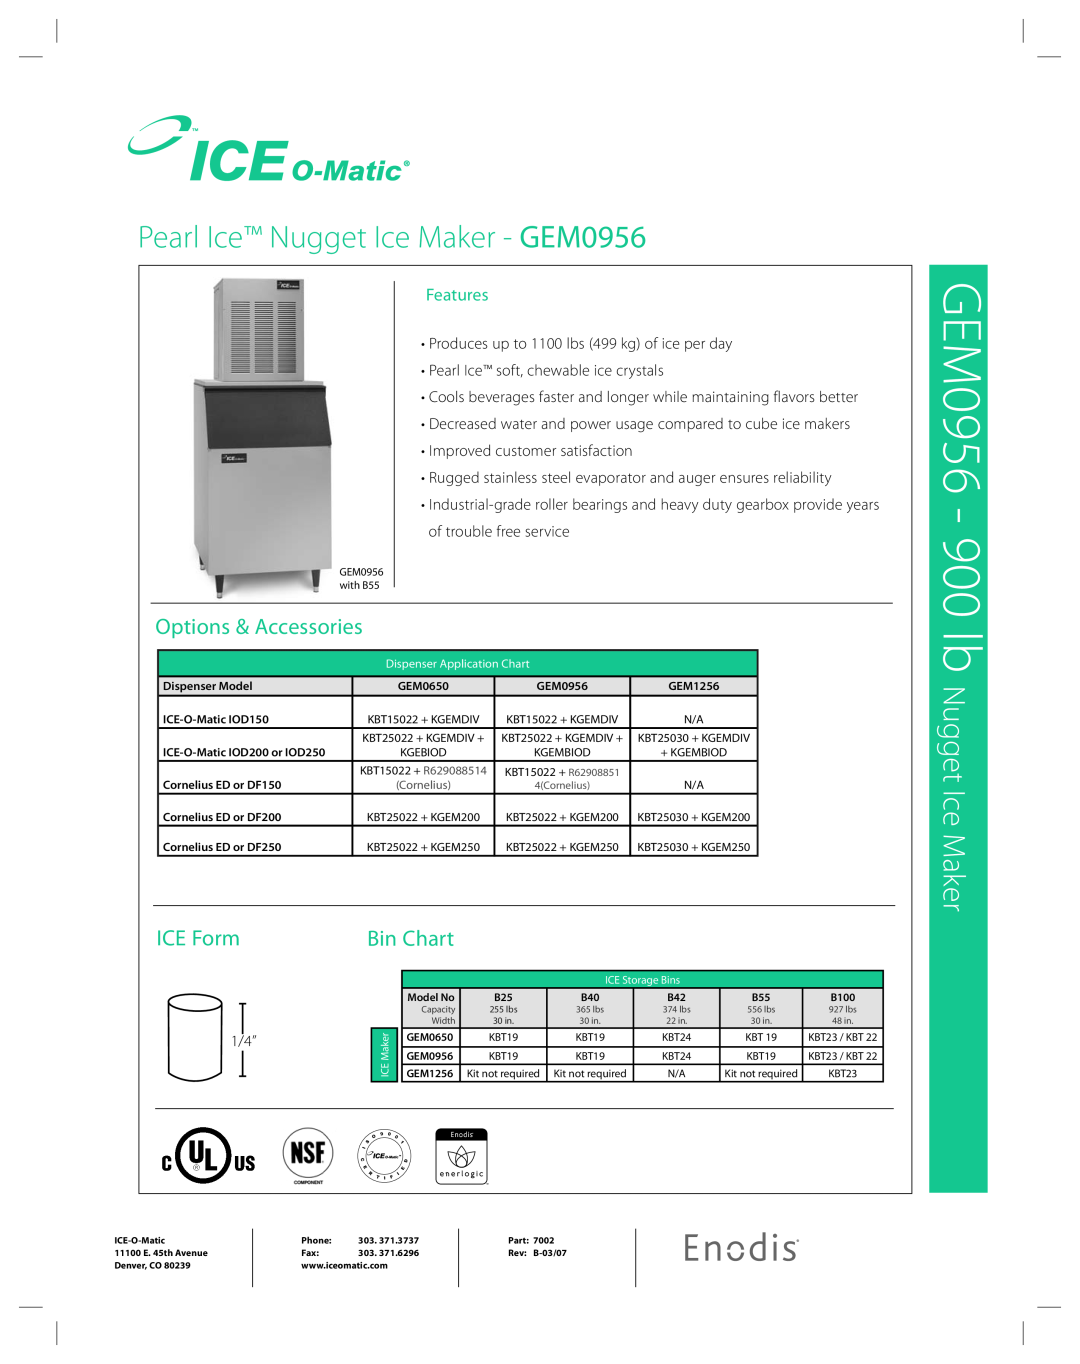 Ice-O-Matic GEM 0956 manual GEM0956 - 900 lb Nugget Ice Maker, Features, Pearl Ice Nugget Ice Maker - GEM0956, ICE Form 